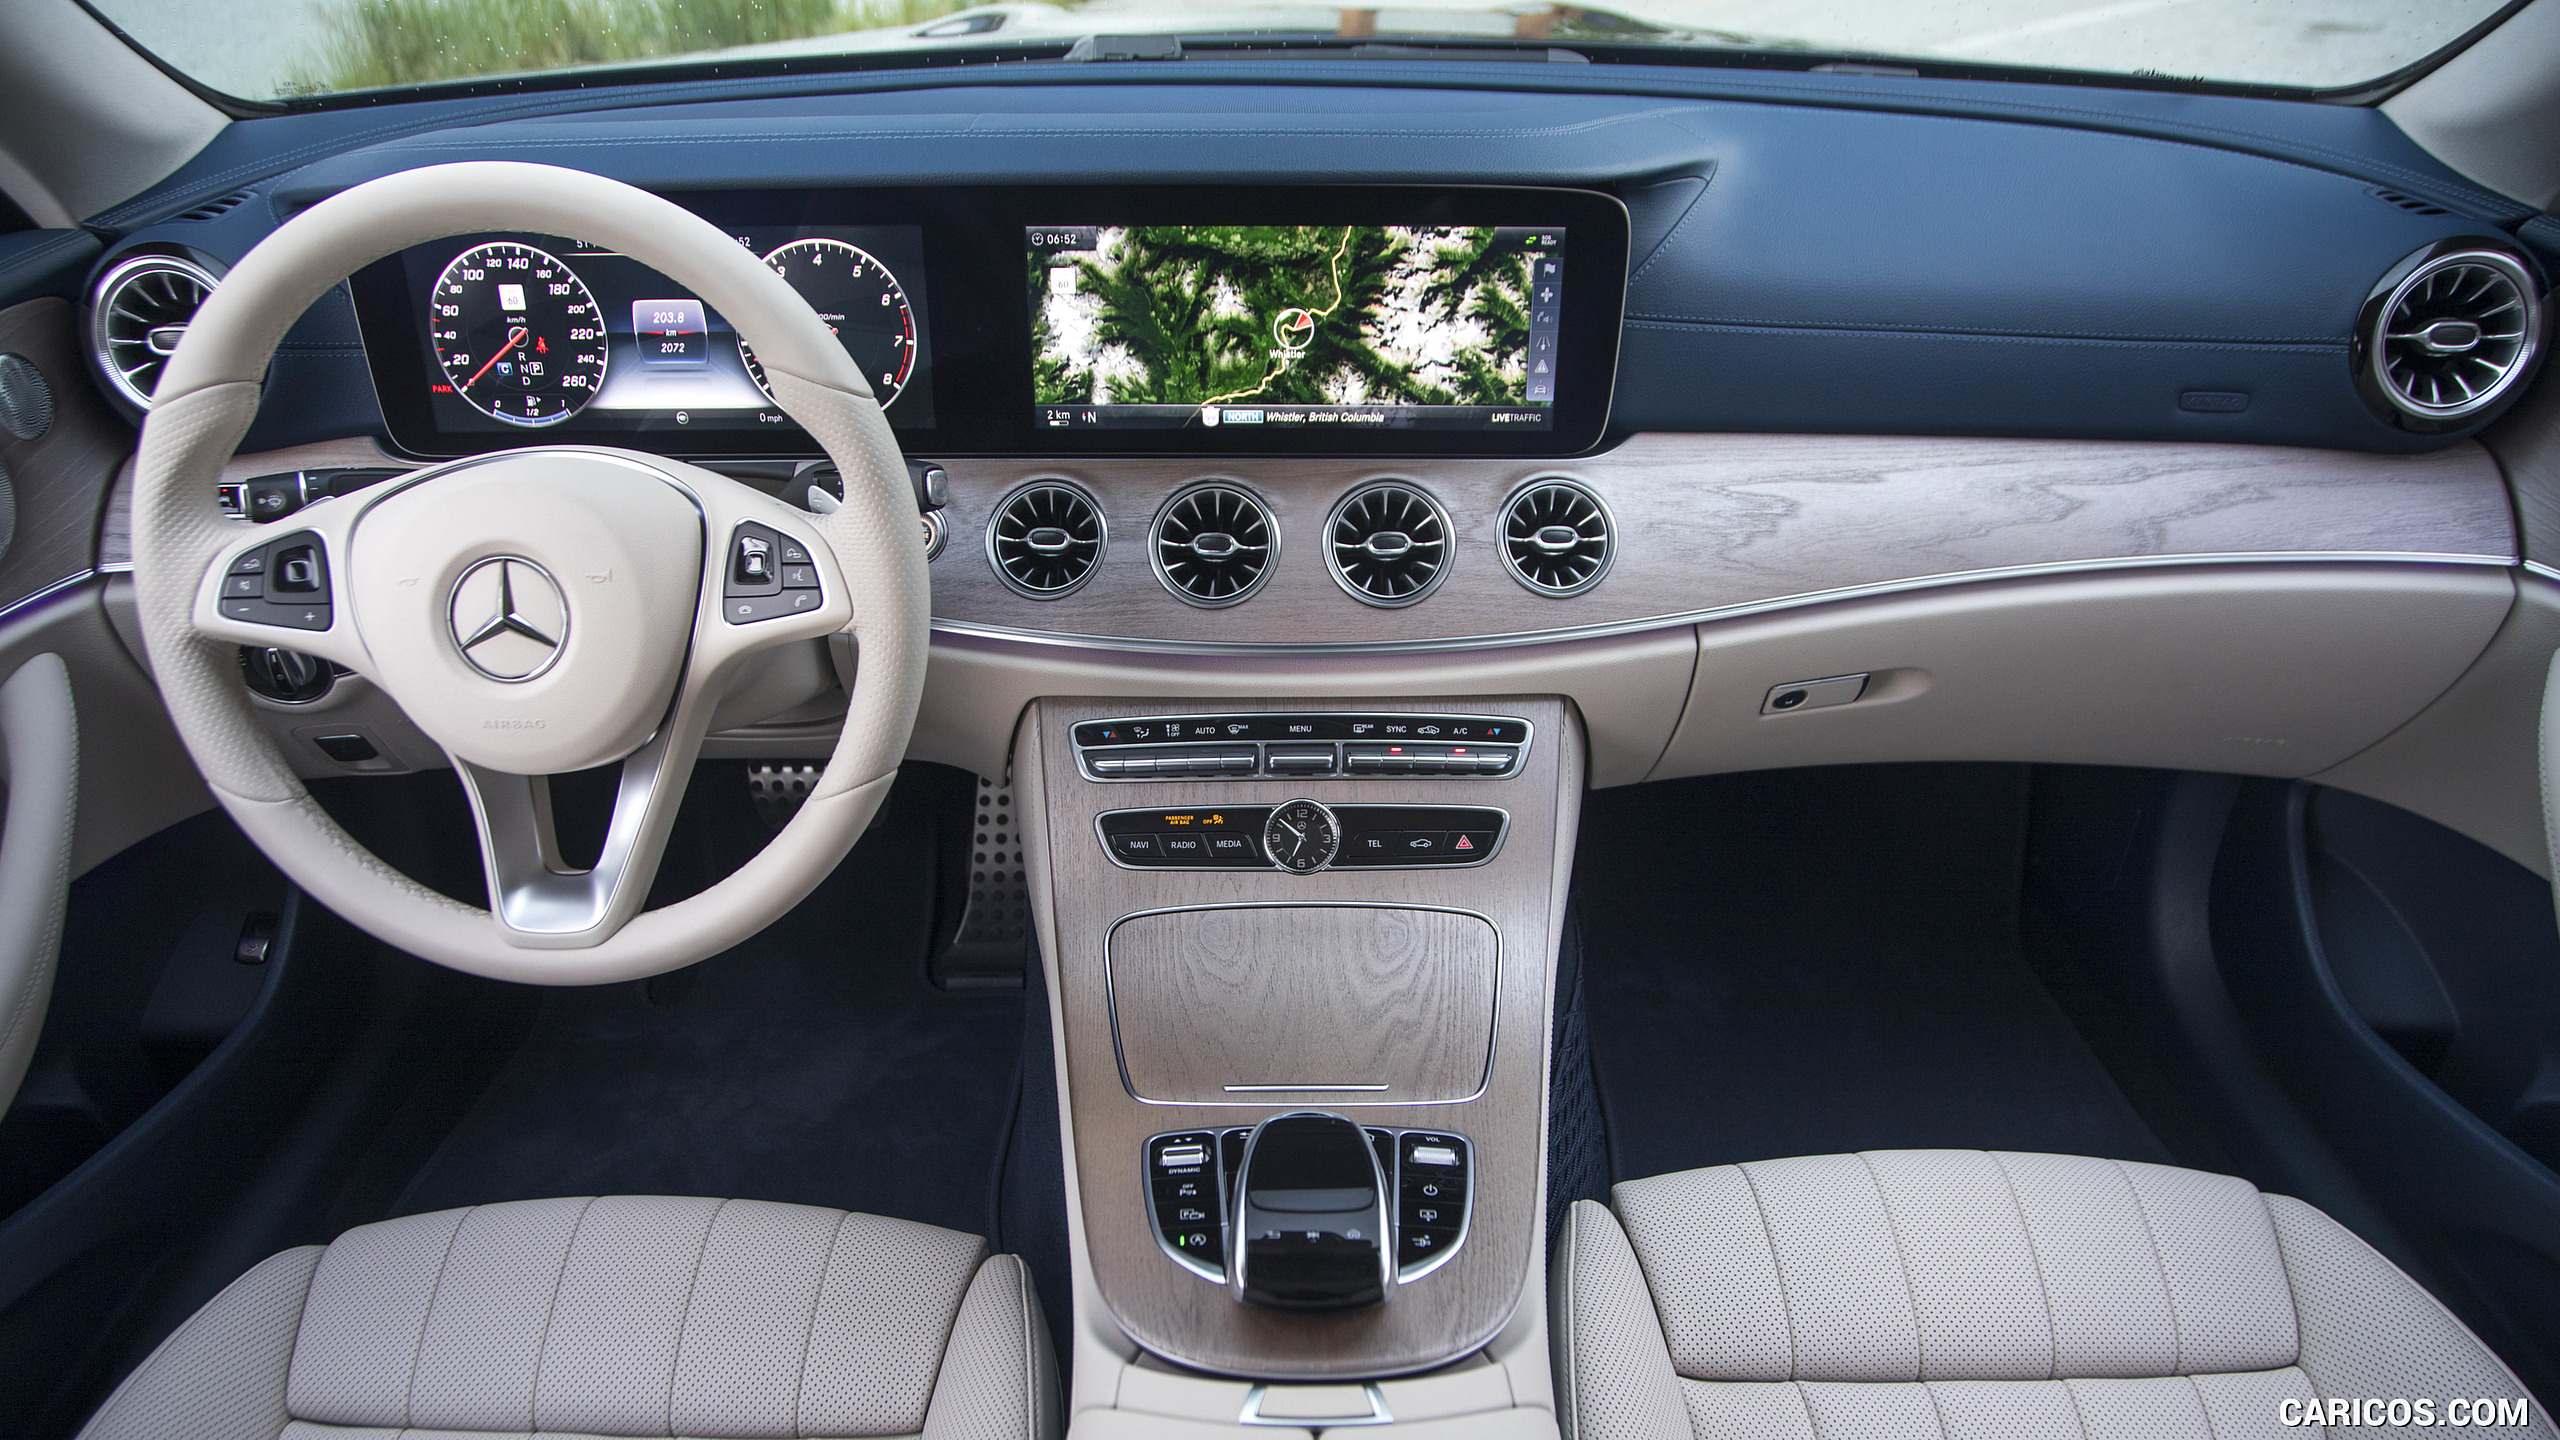 2018 Mercedes-Benz E-Class E400 4MATIC Coupe (US-Spec) - Interior, Cockpit, #341 of 365